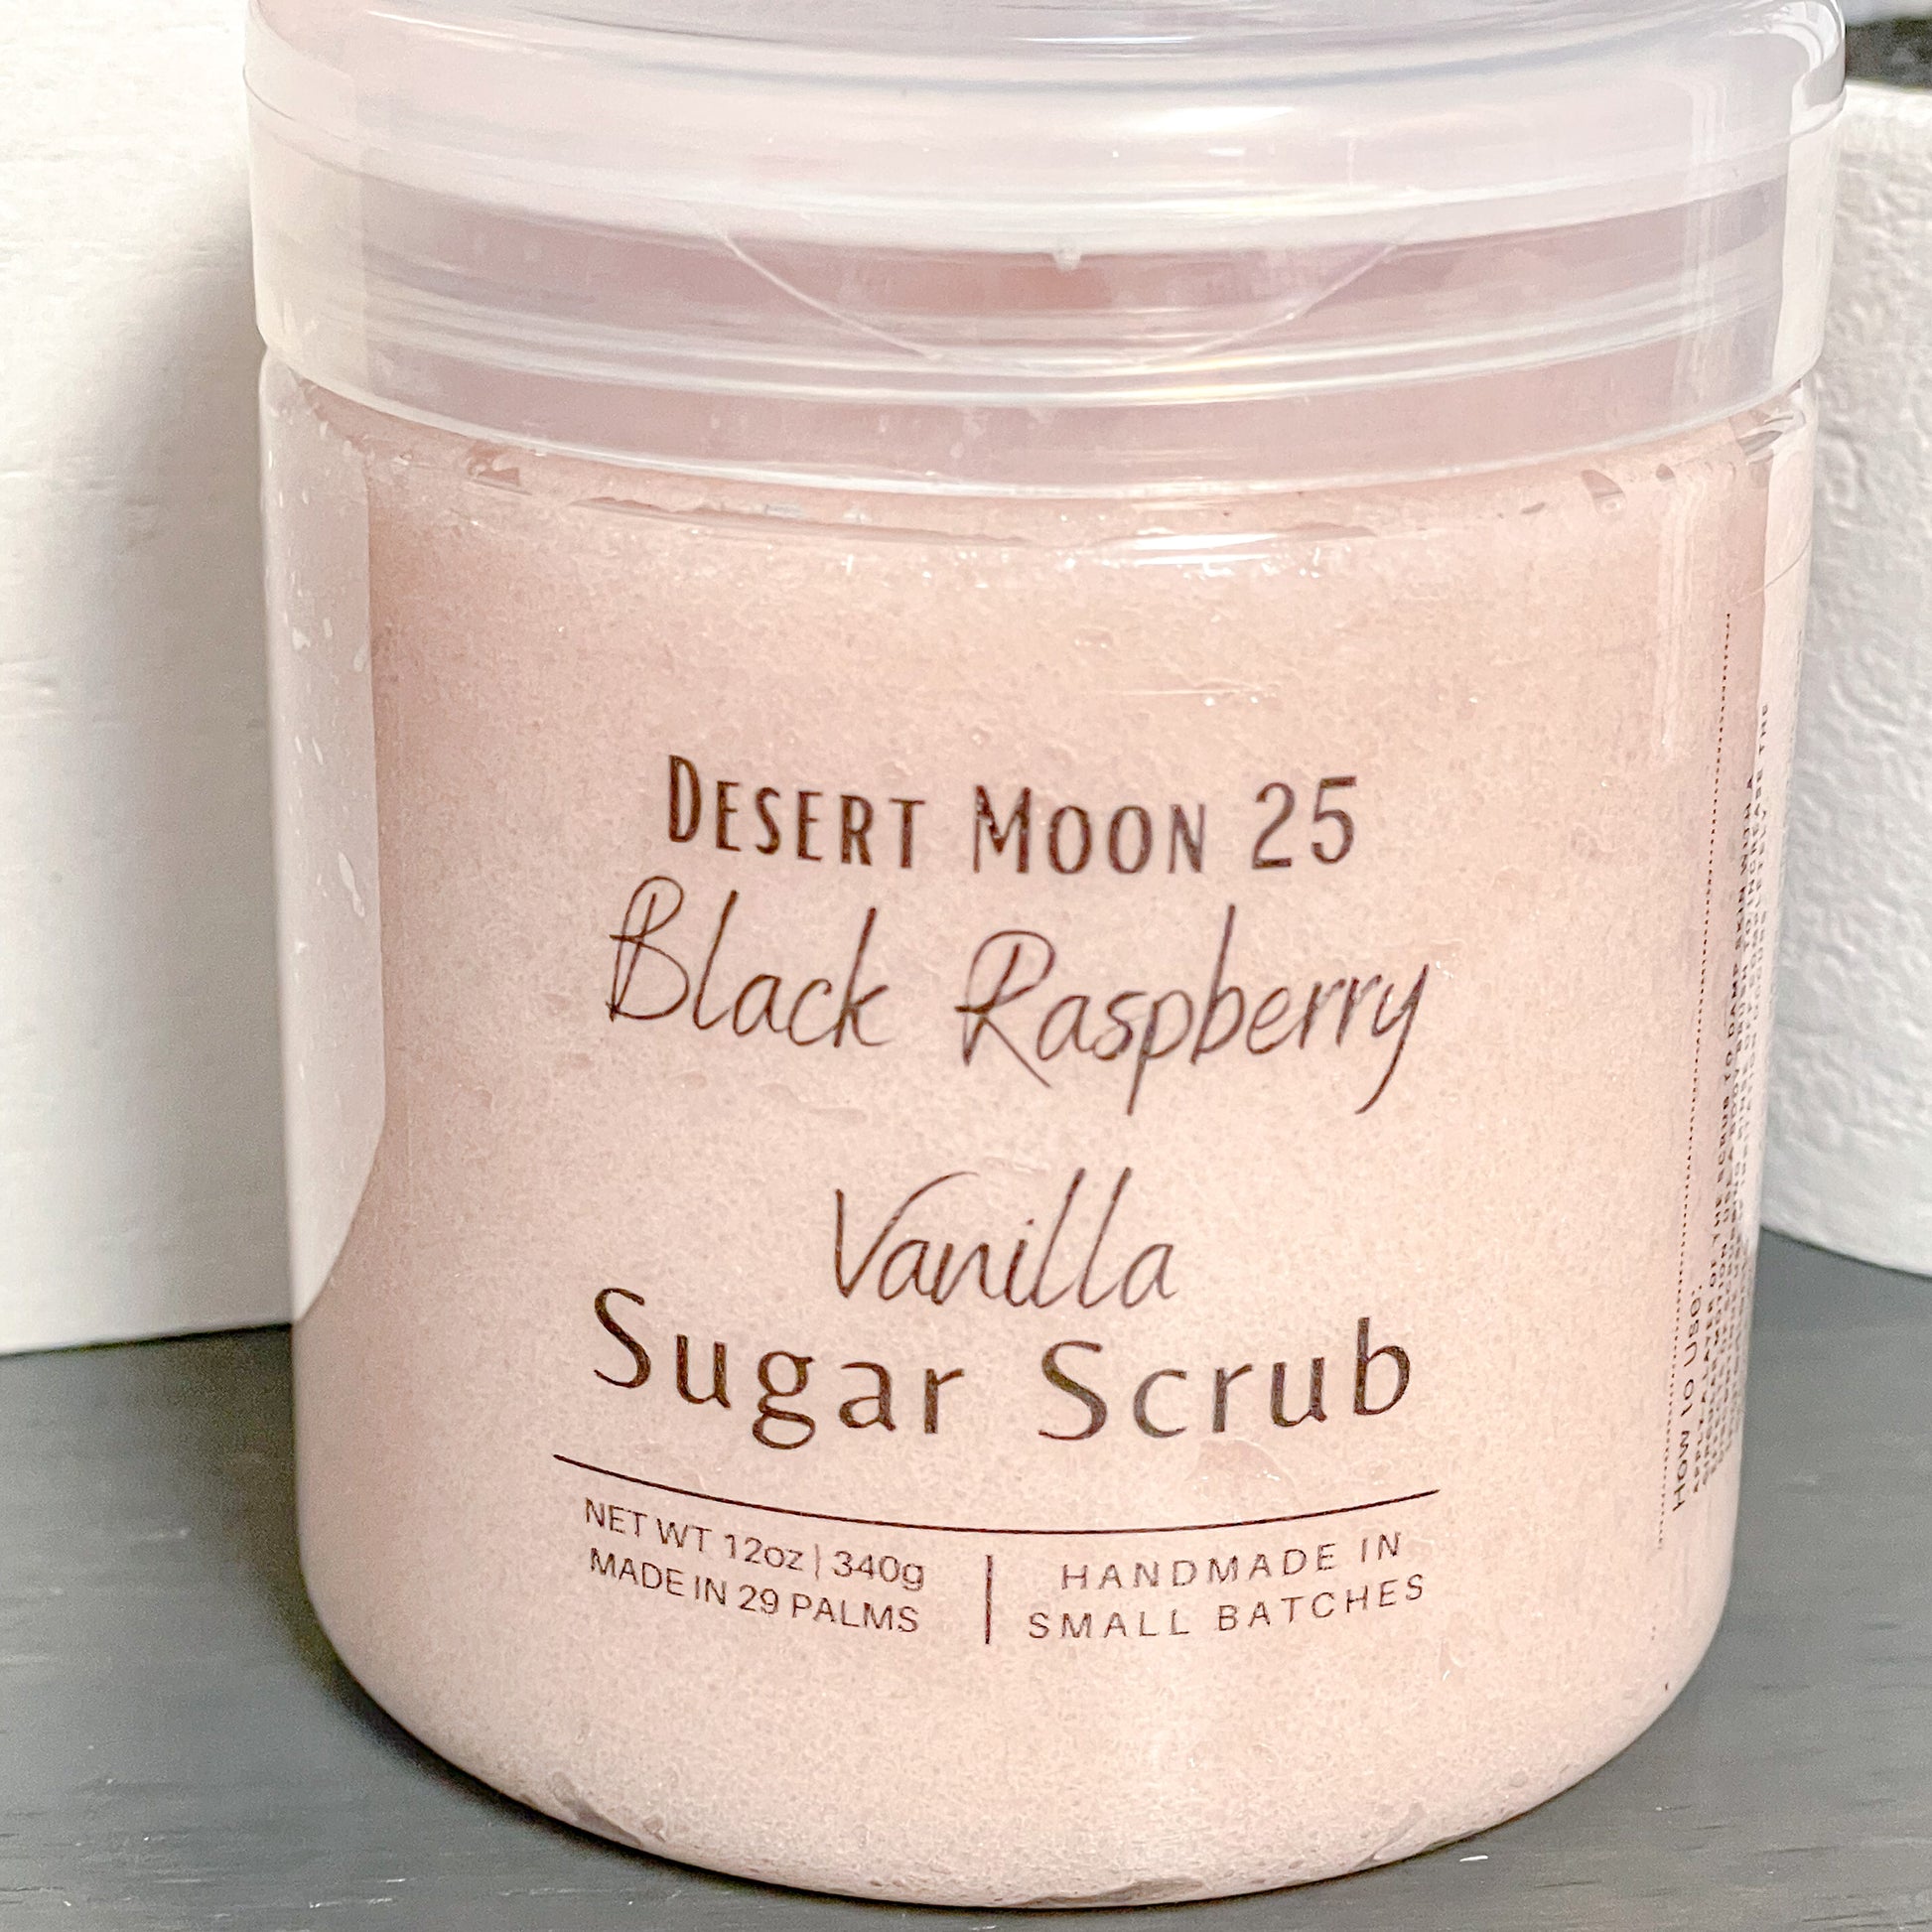 Black Raspberry Vanilla Sugar Scrub 6oz - Desert Moon 25